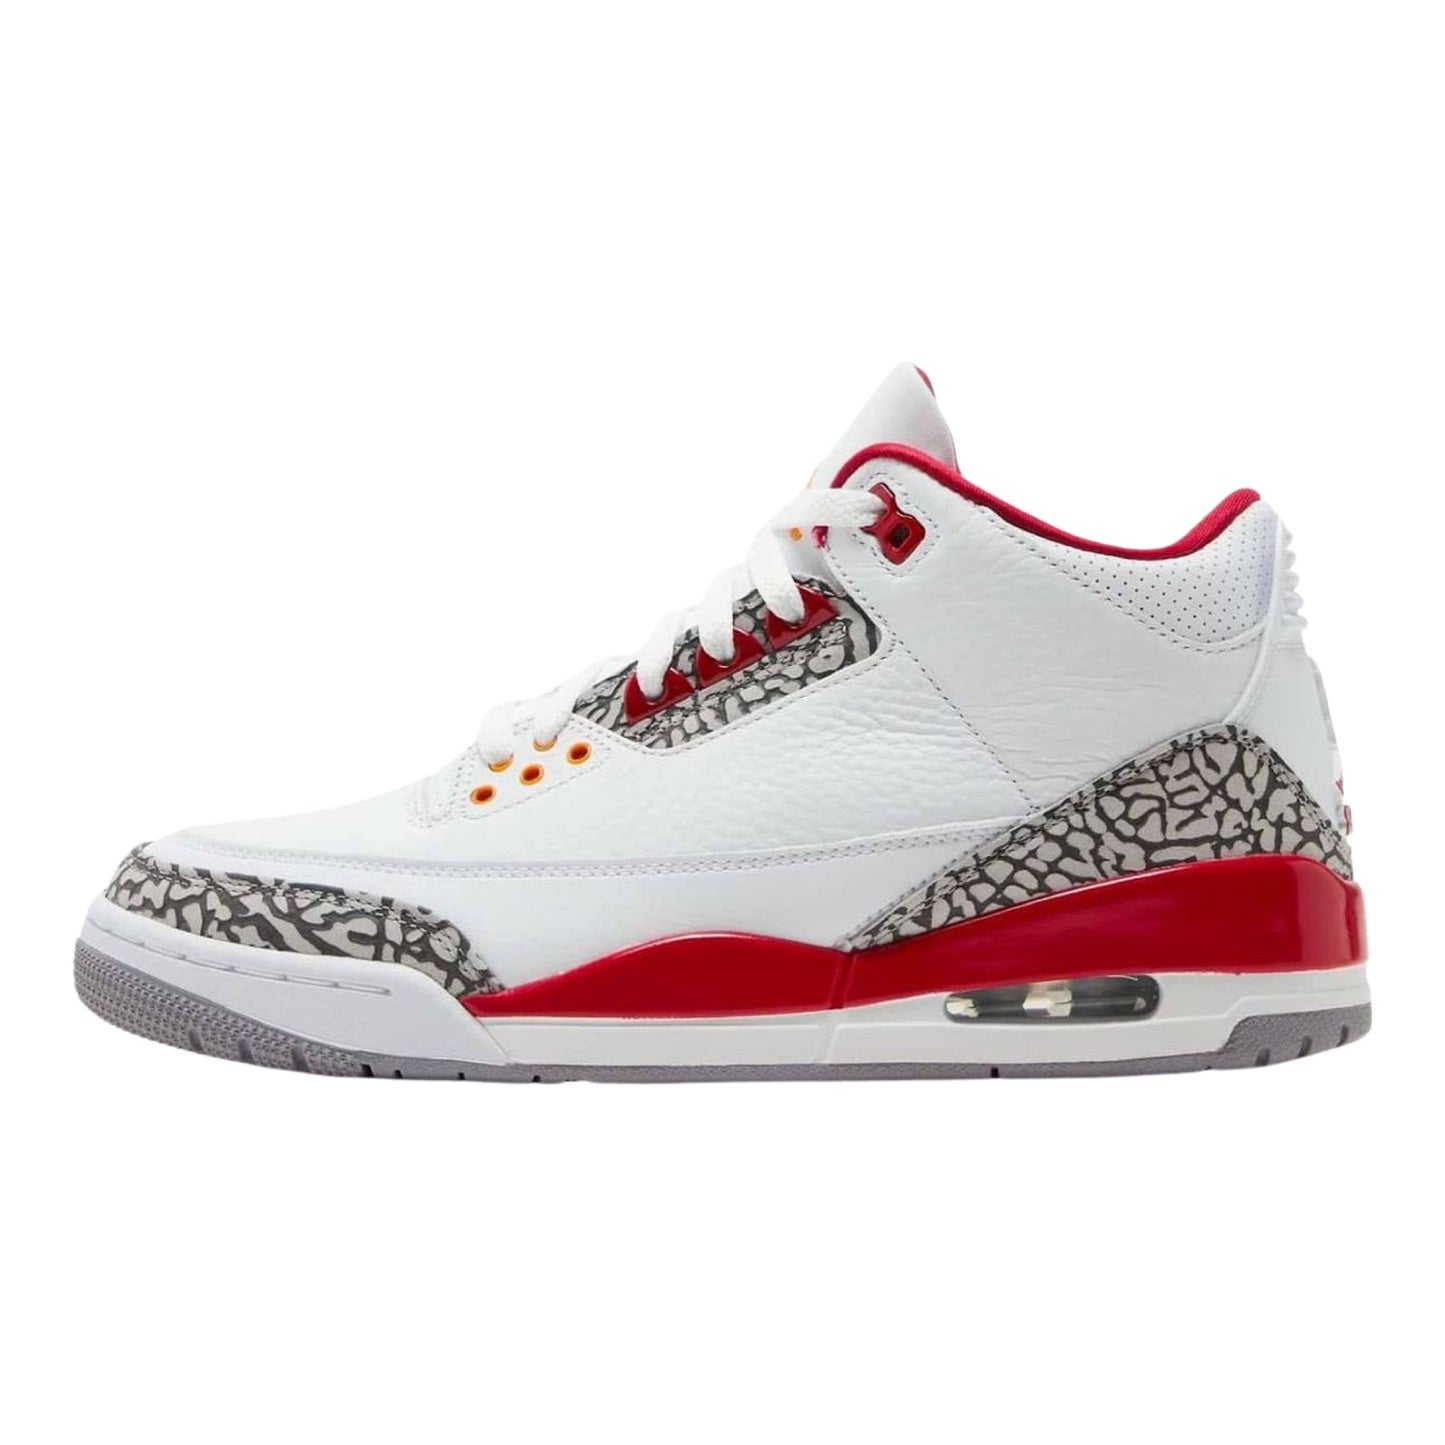 Jordan 3 Retro “Cardinal Red”